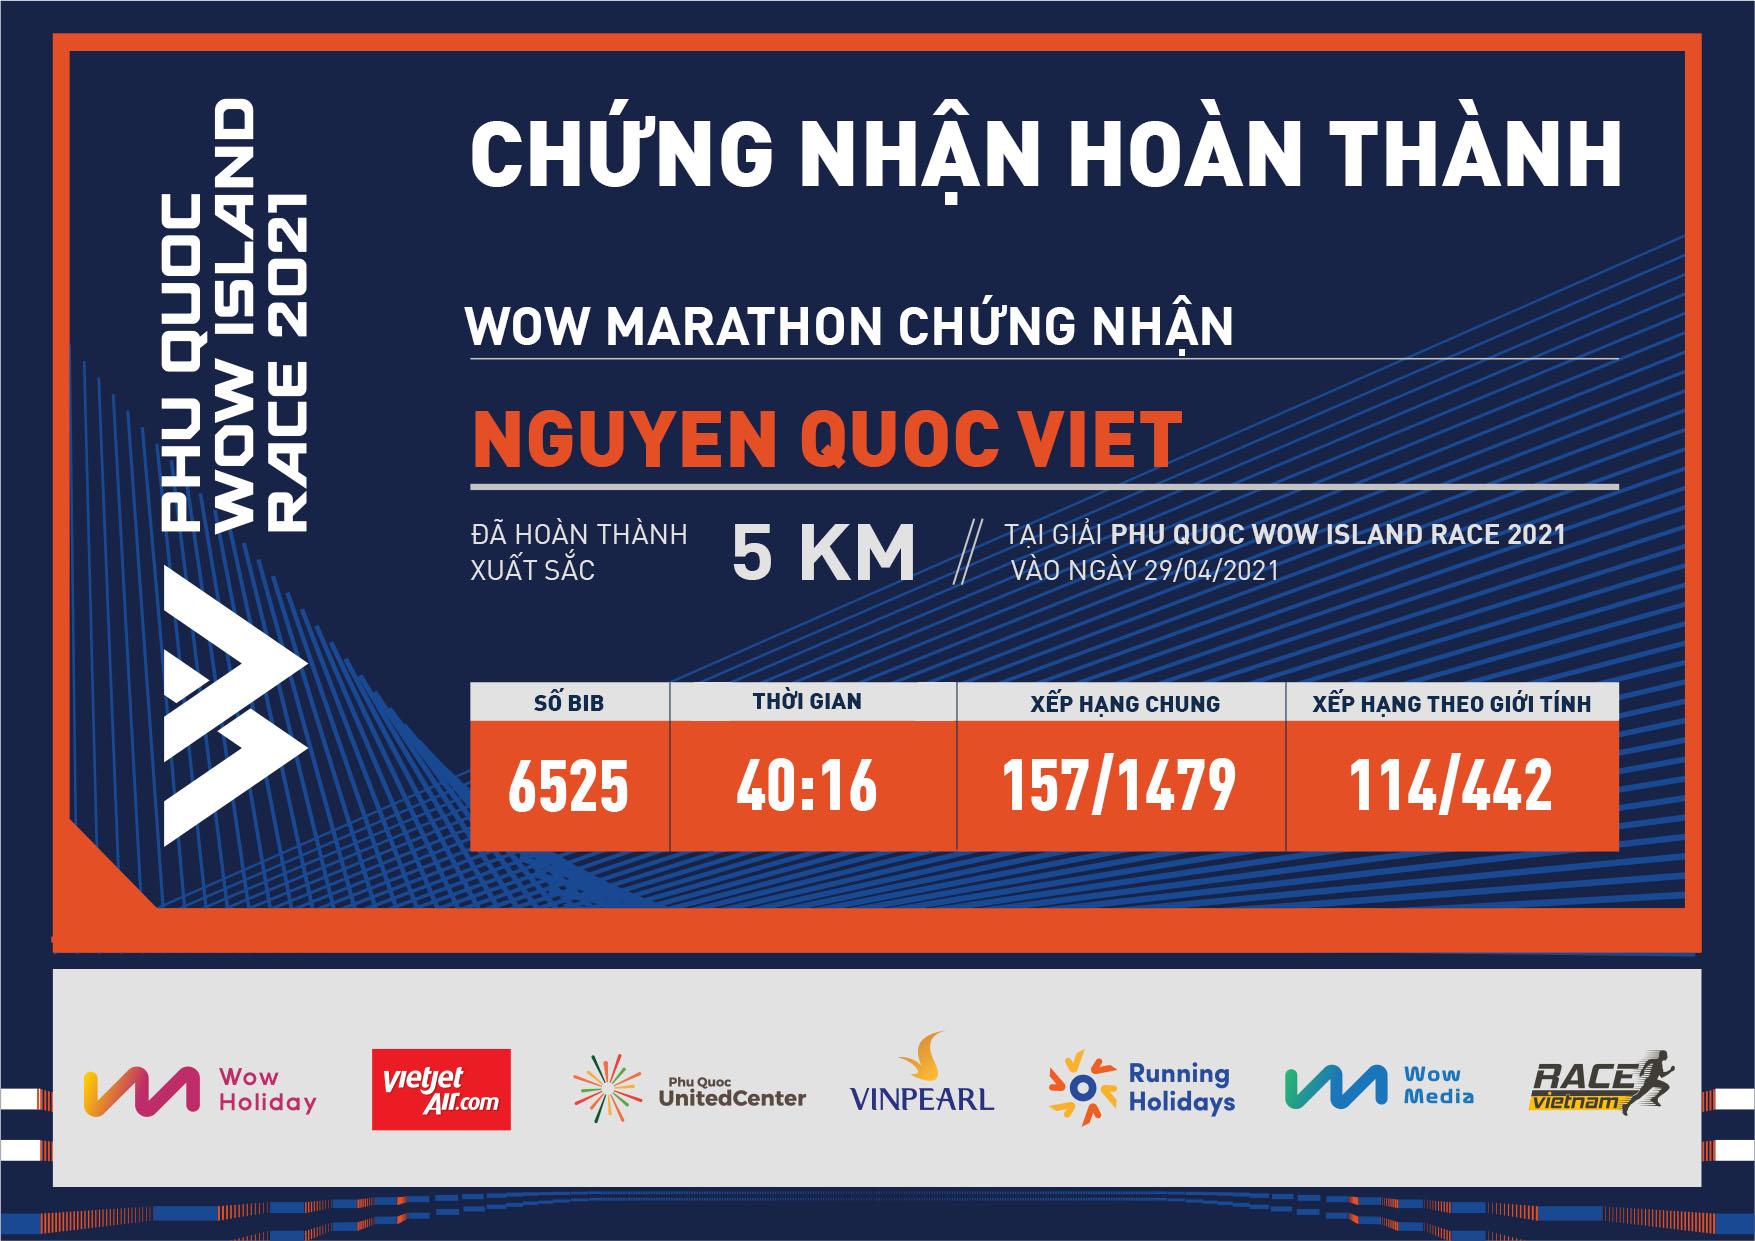 6525 - Nguyen Quoc Viet